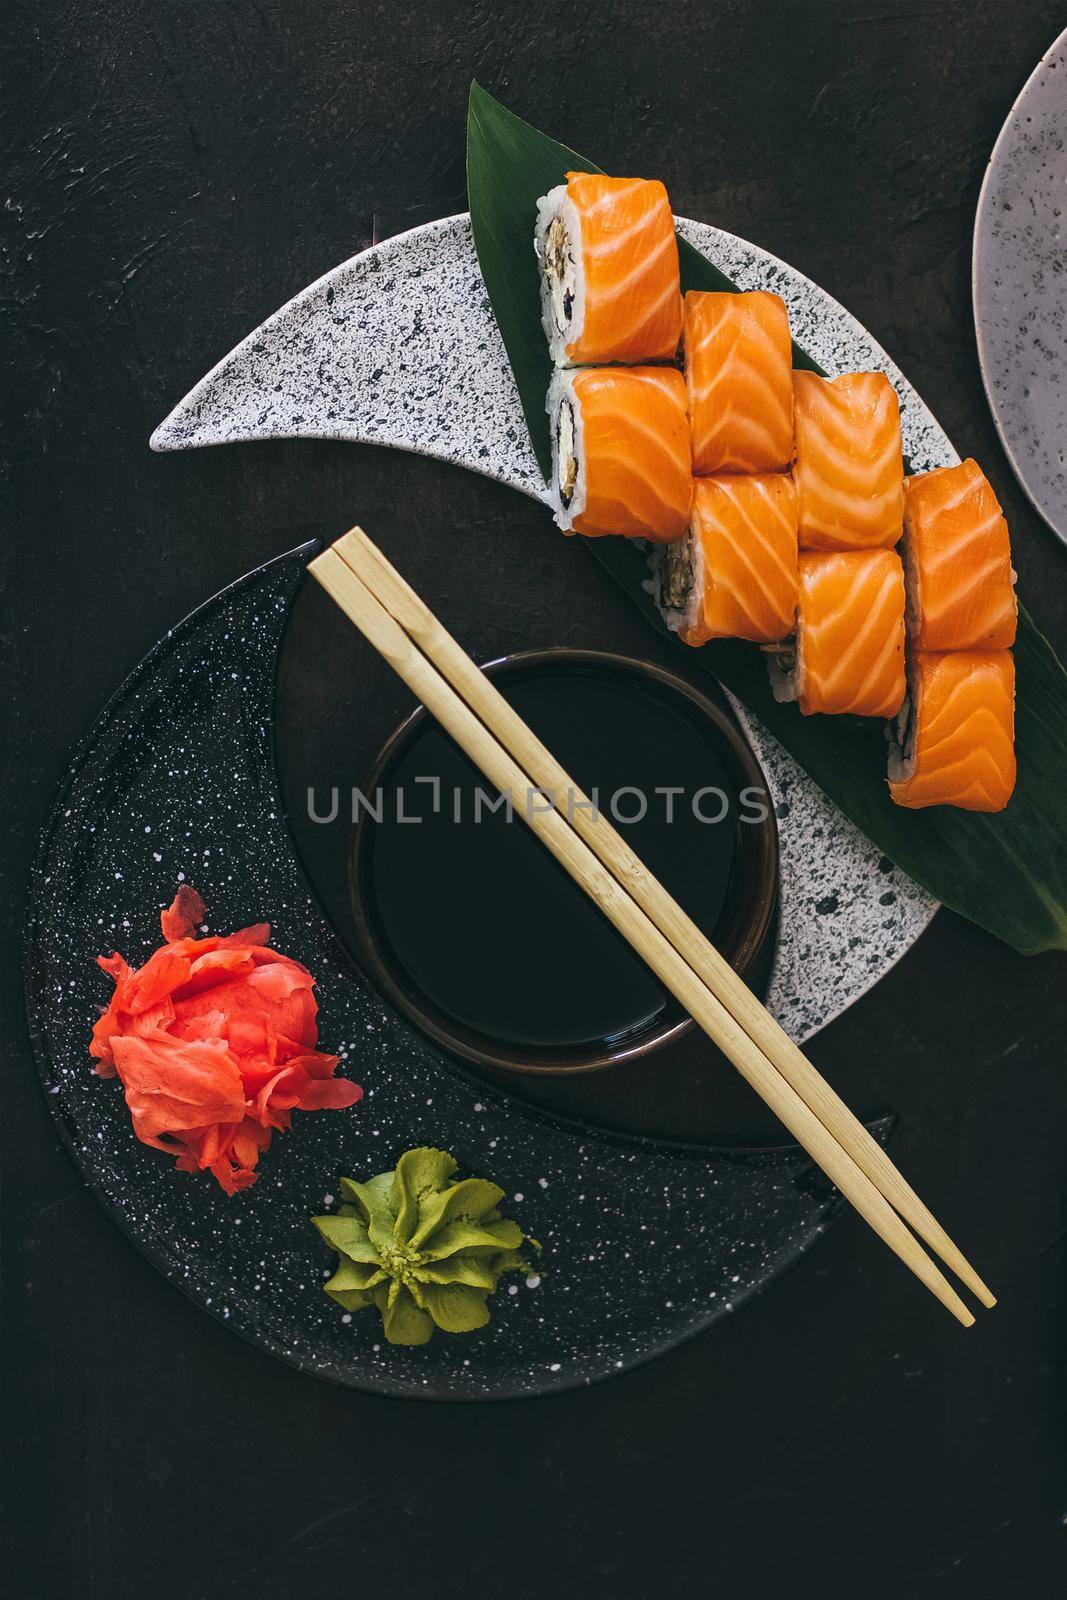 Sushi with salmon, cream cheese Philadelphia, cucumber and wasabi.